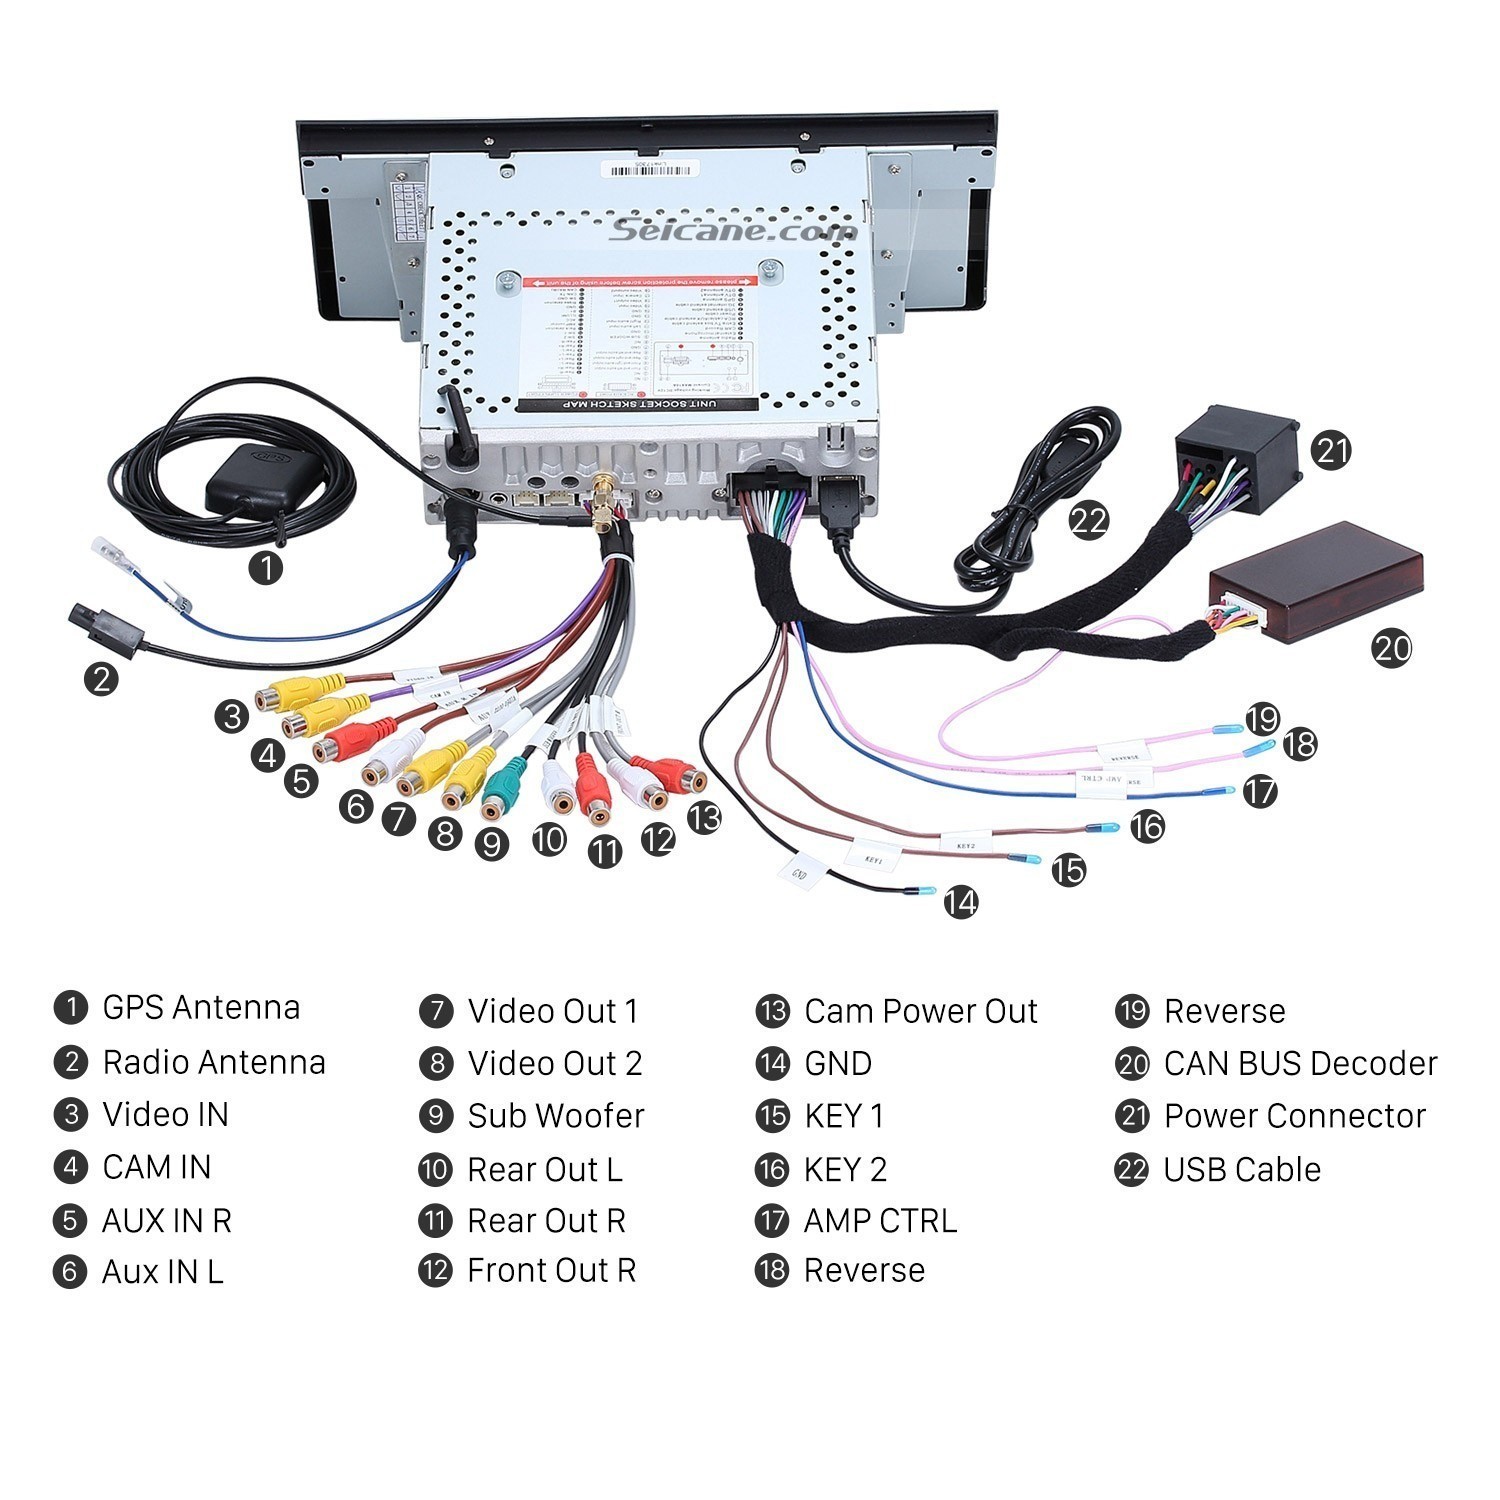 Car Amplifier Circuit Diagram Multiple Amplifier Wiring Diagram Valid Amp Wiring Diagram Car Of Car Amplifier Circuit Diagram